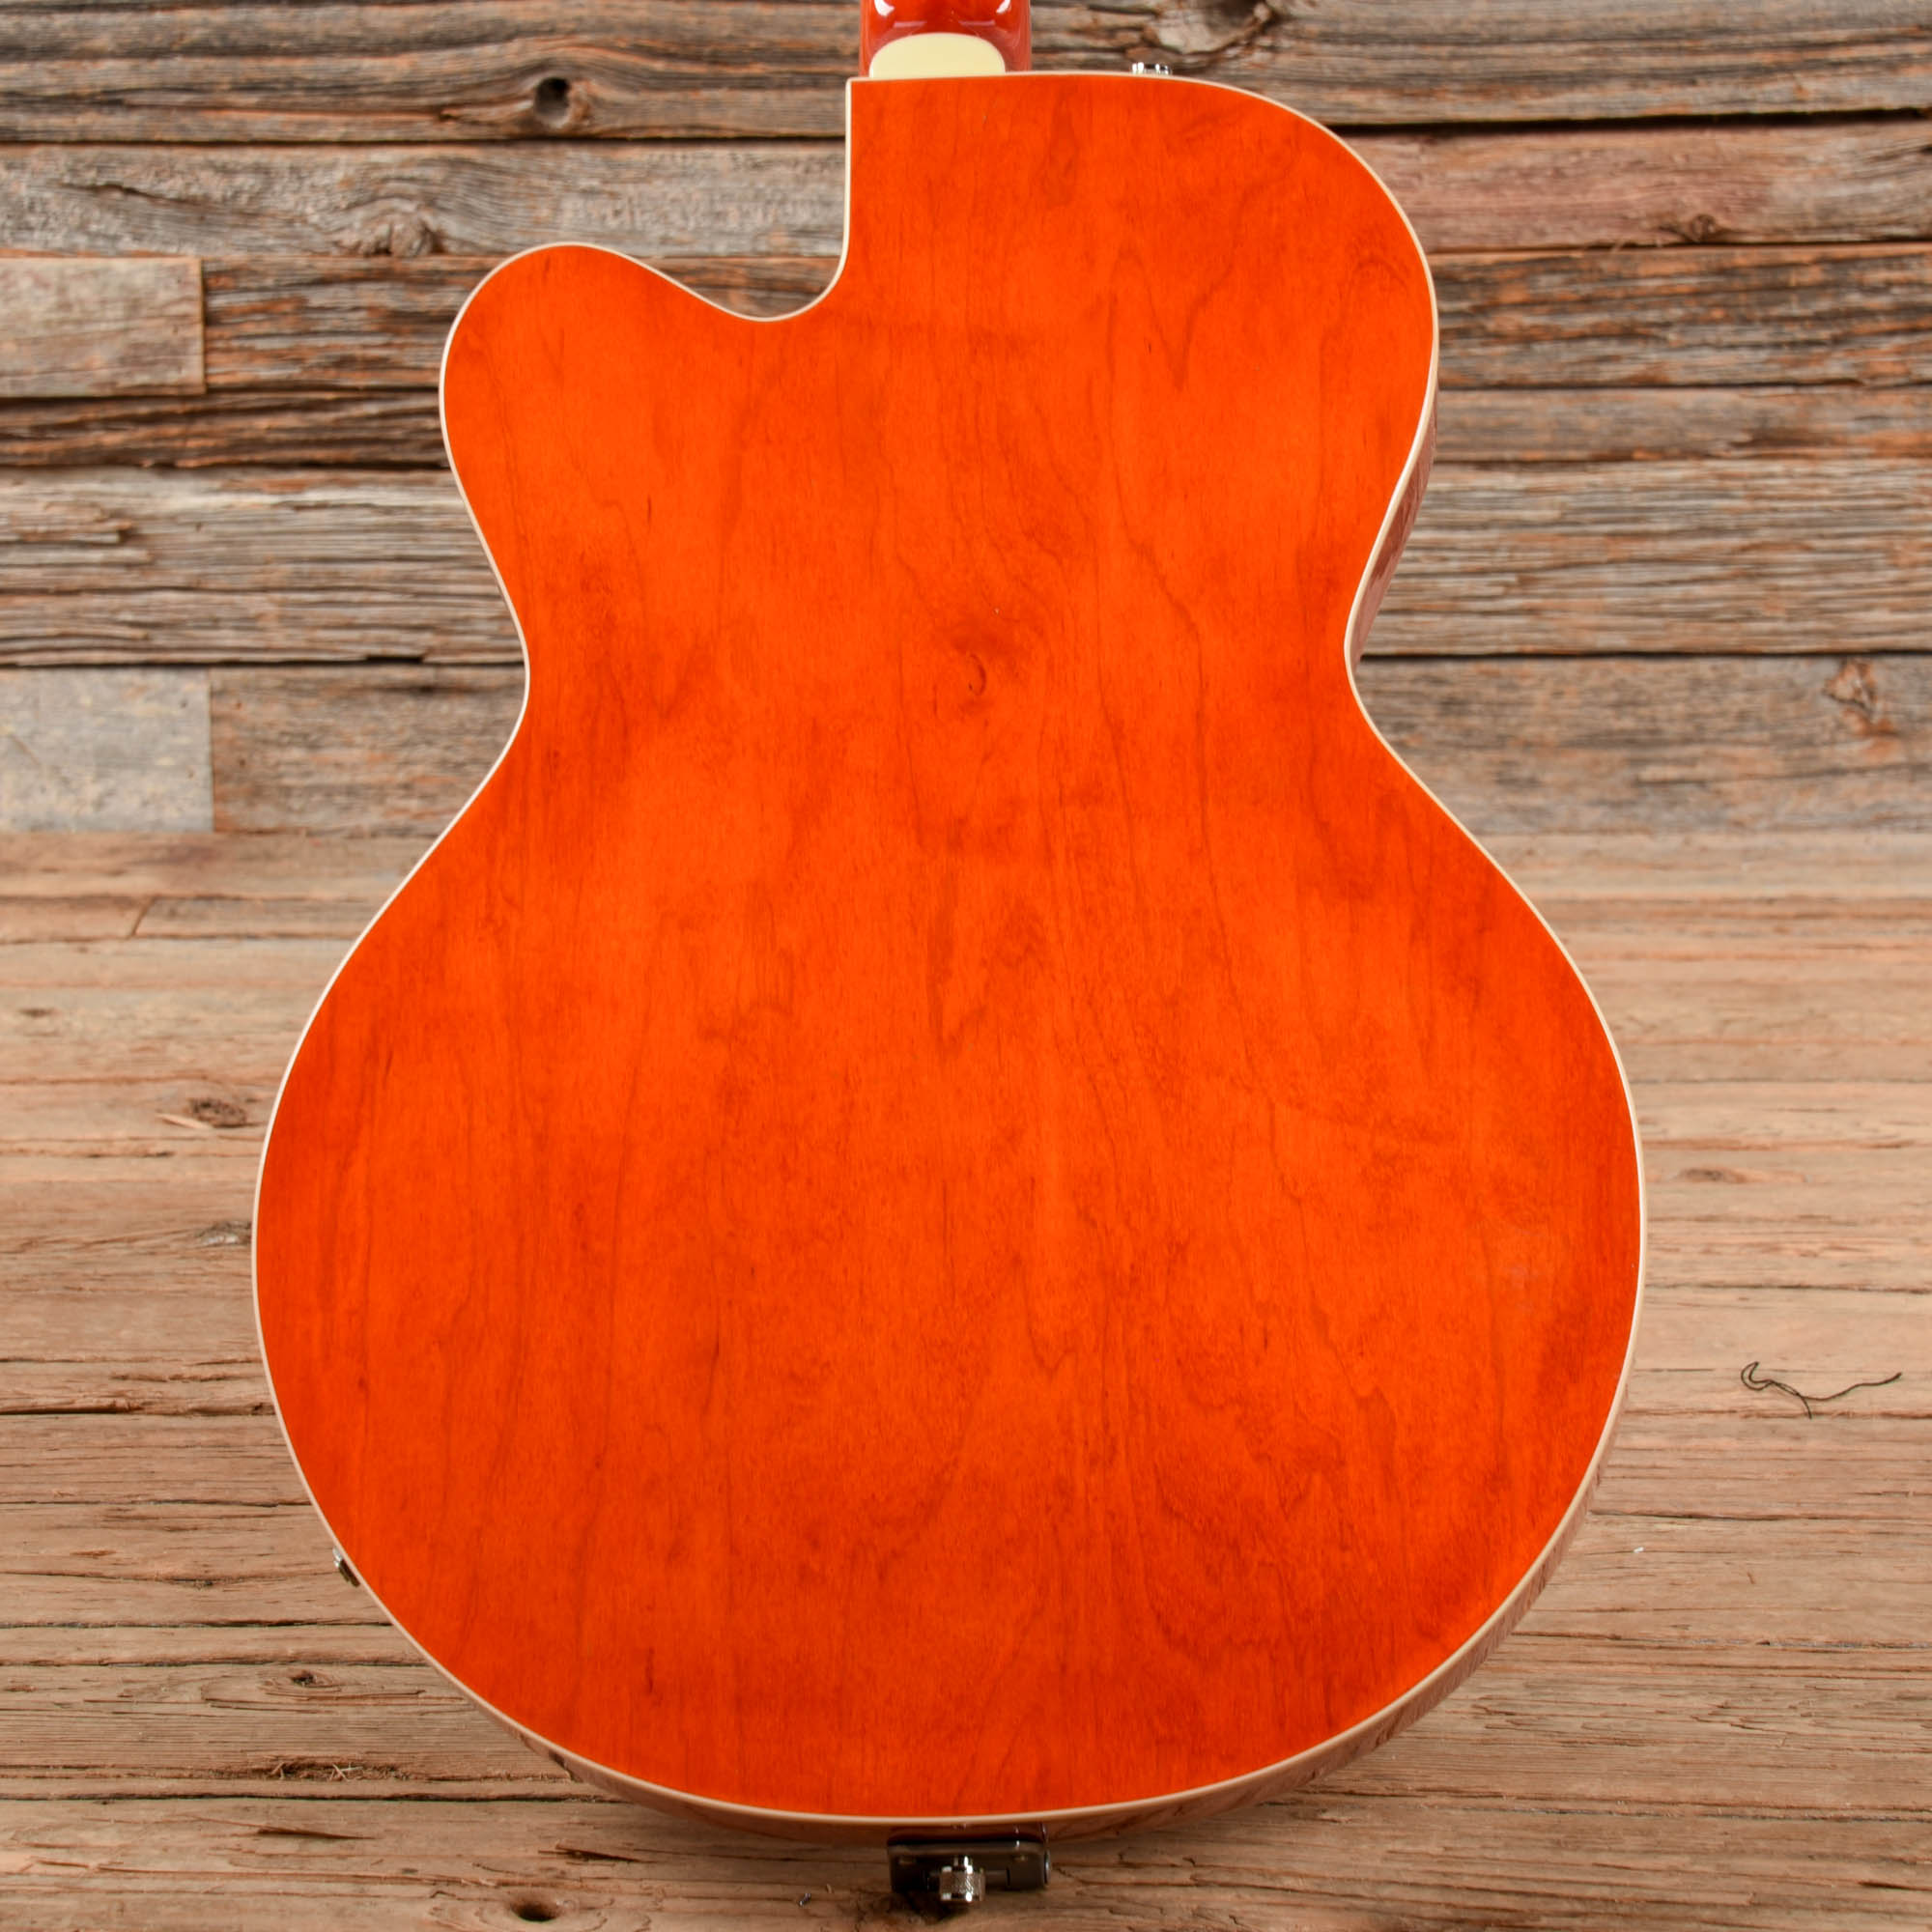 Gretsch G5120 Electromatic Hollow Body Orange 2010 Electric Guitars / Hollow Body